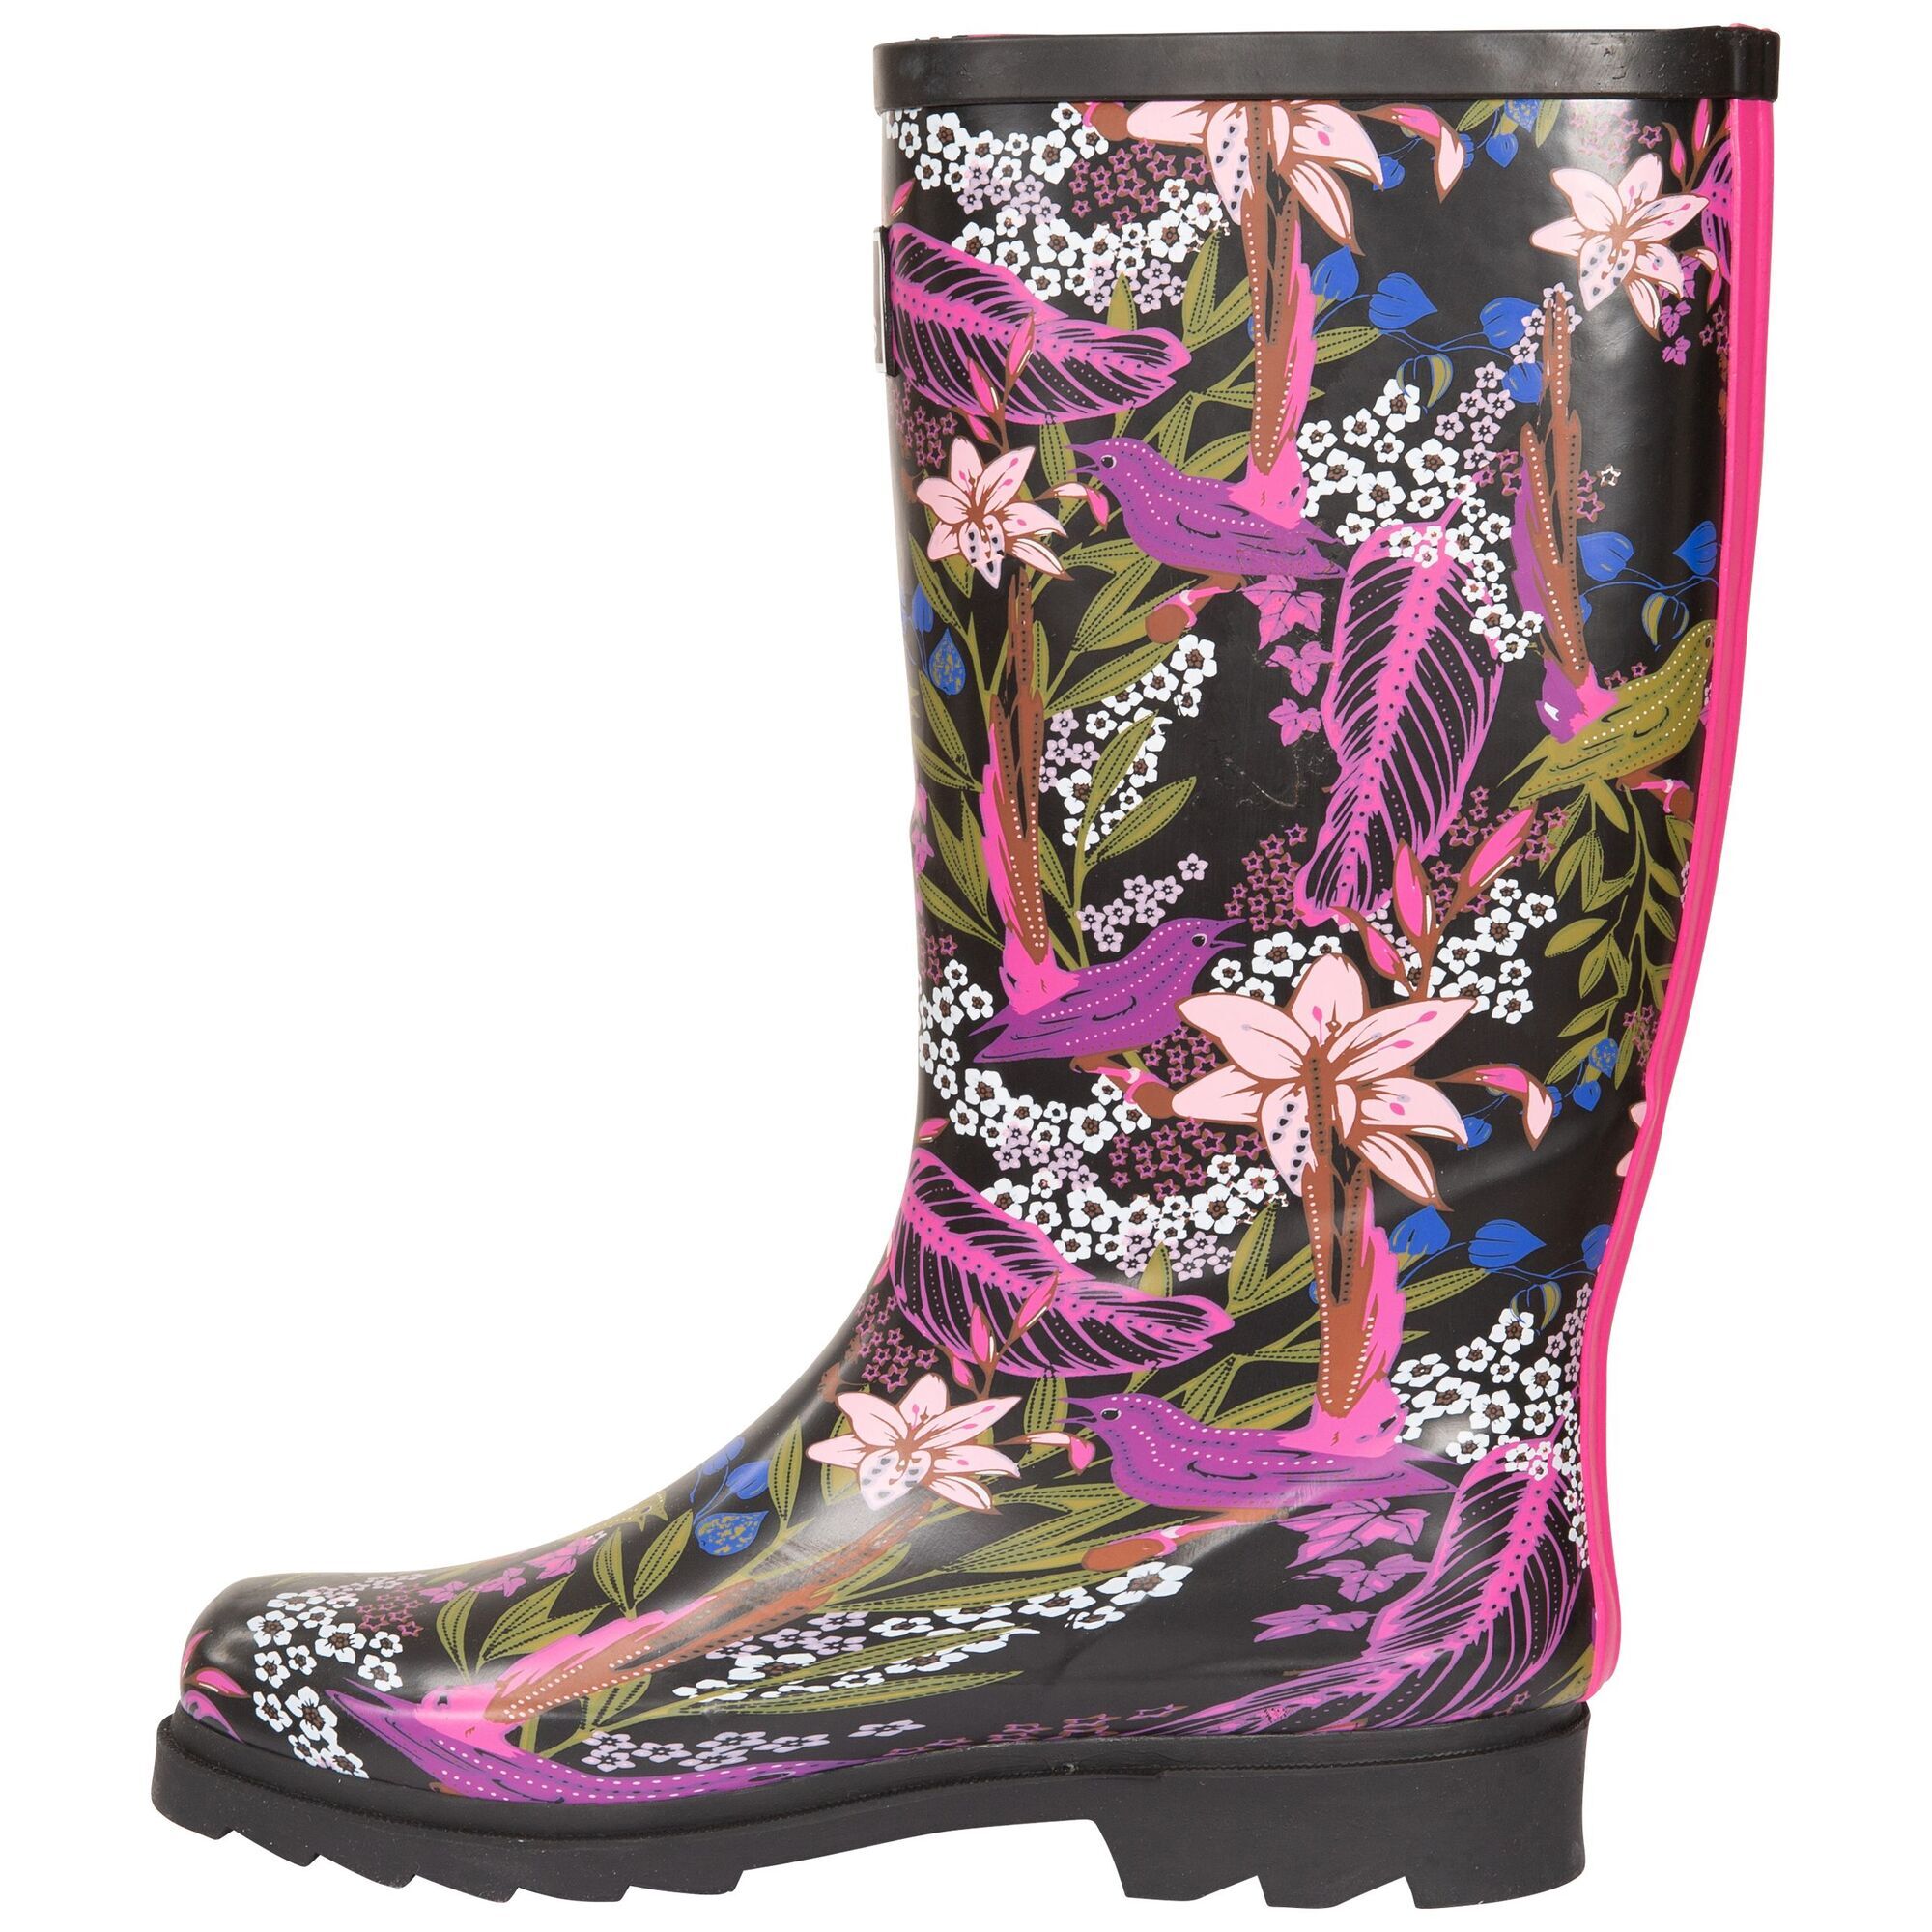 /ladias Floral Wellington Boots Trespass Elena